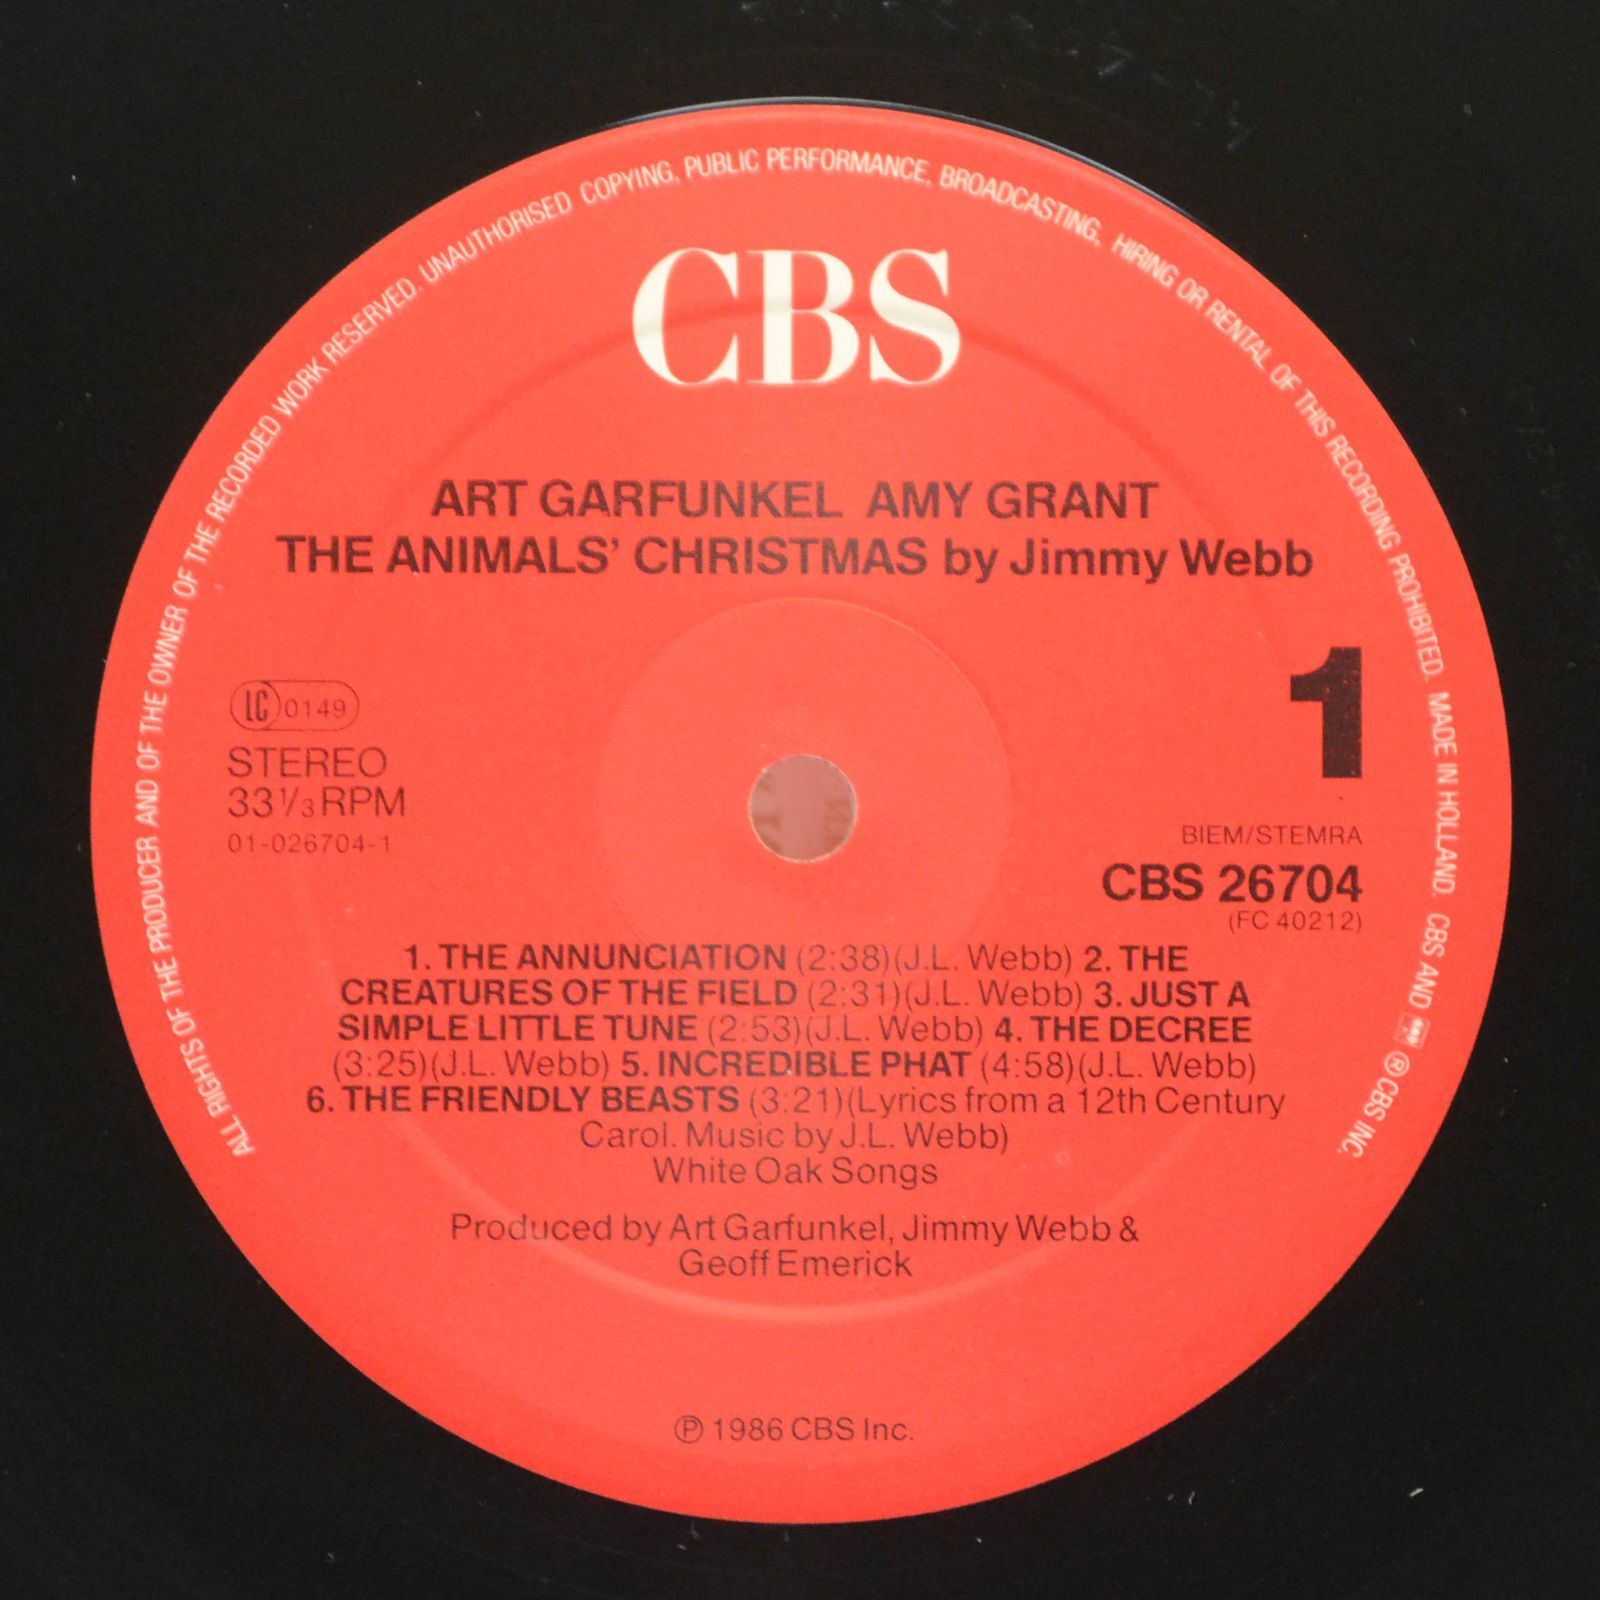 Art Garfunkel / Amy Grant / Jimmy Webb — The Animals' Christmas By Jimmy Webb (booklet), 1986